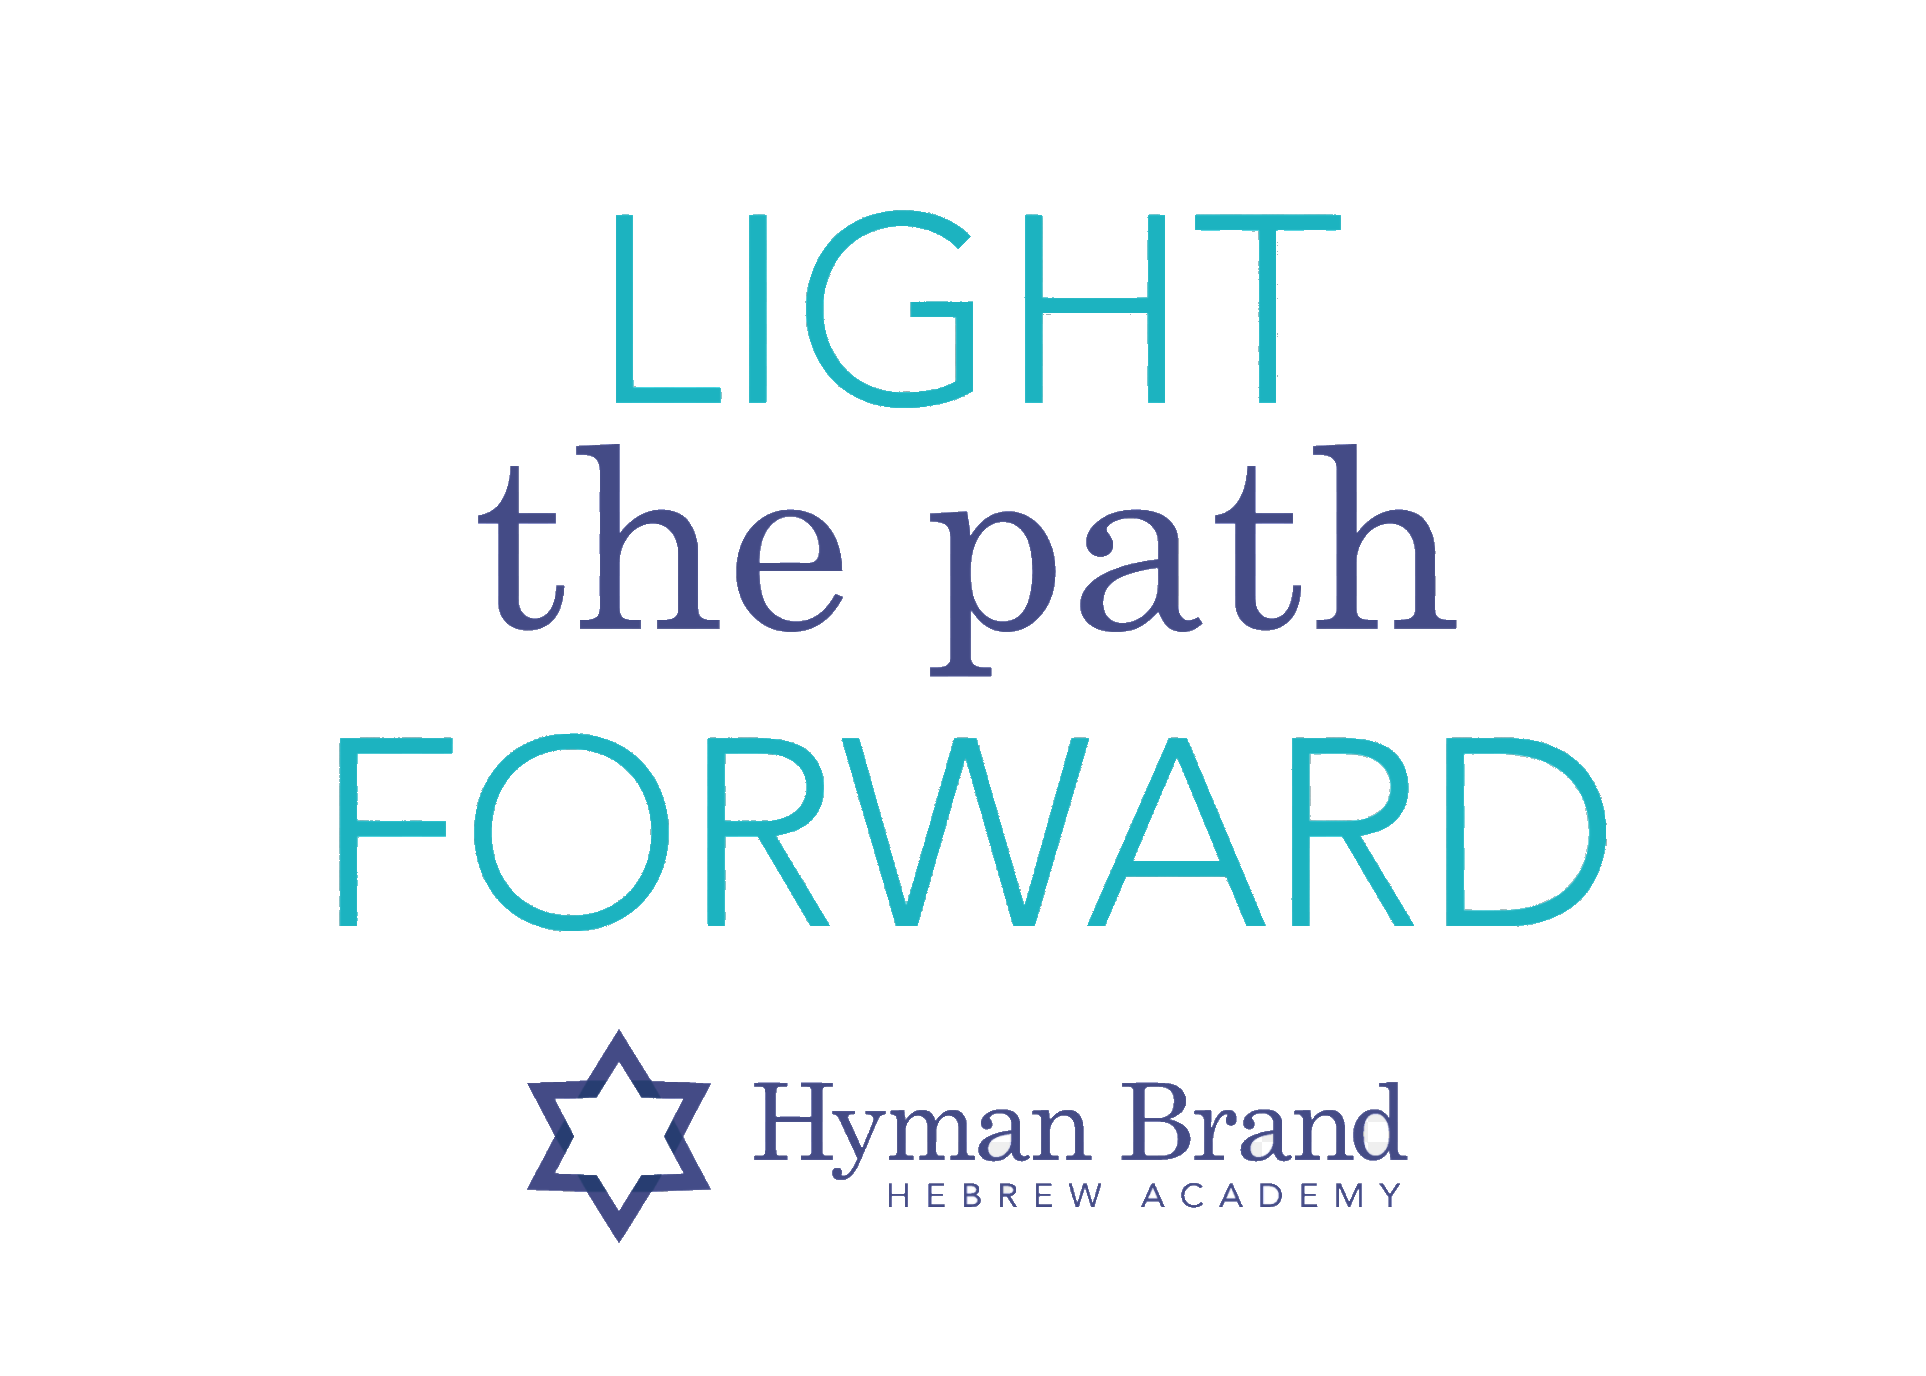 Hyman Brand Hebrew Academy – Civic Service Award Celebration